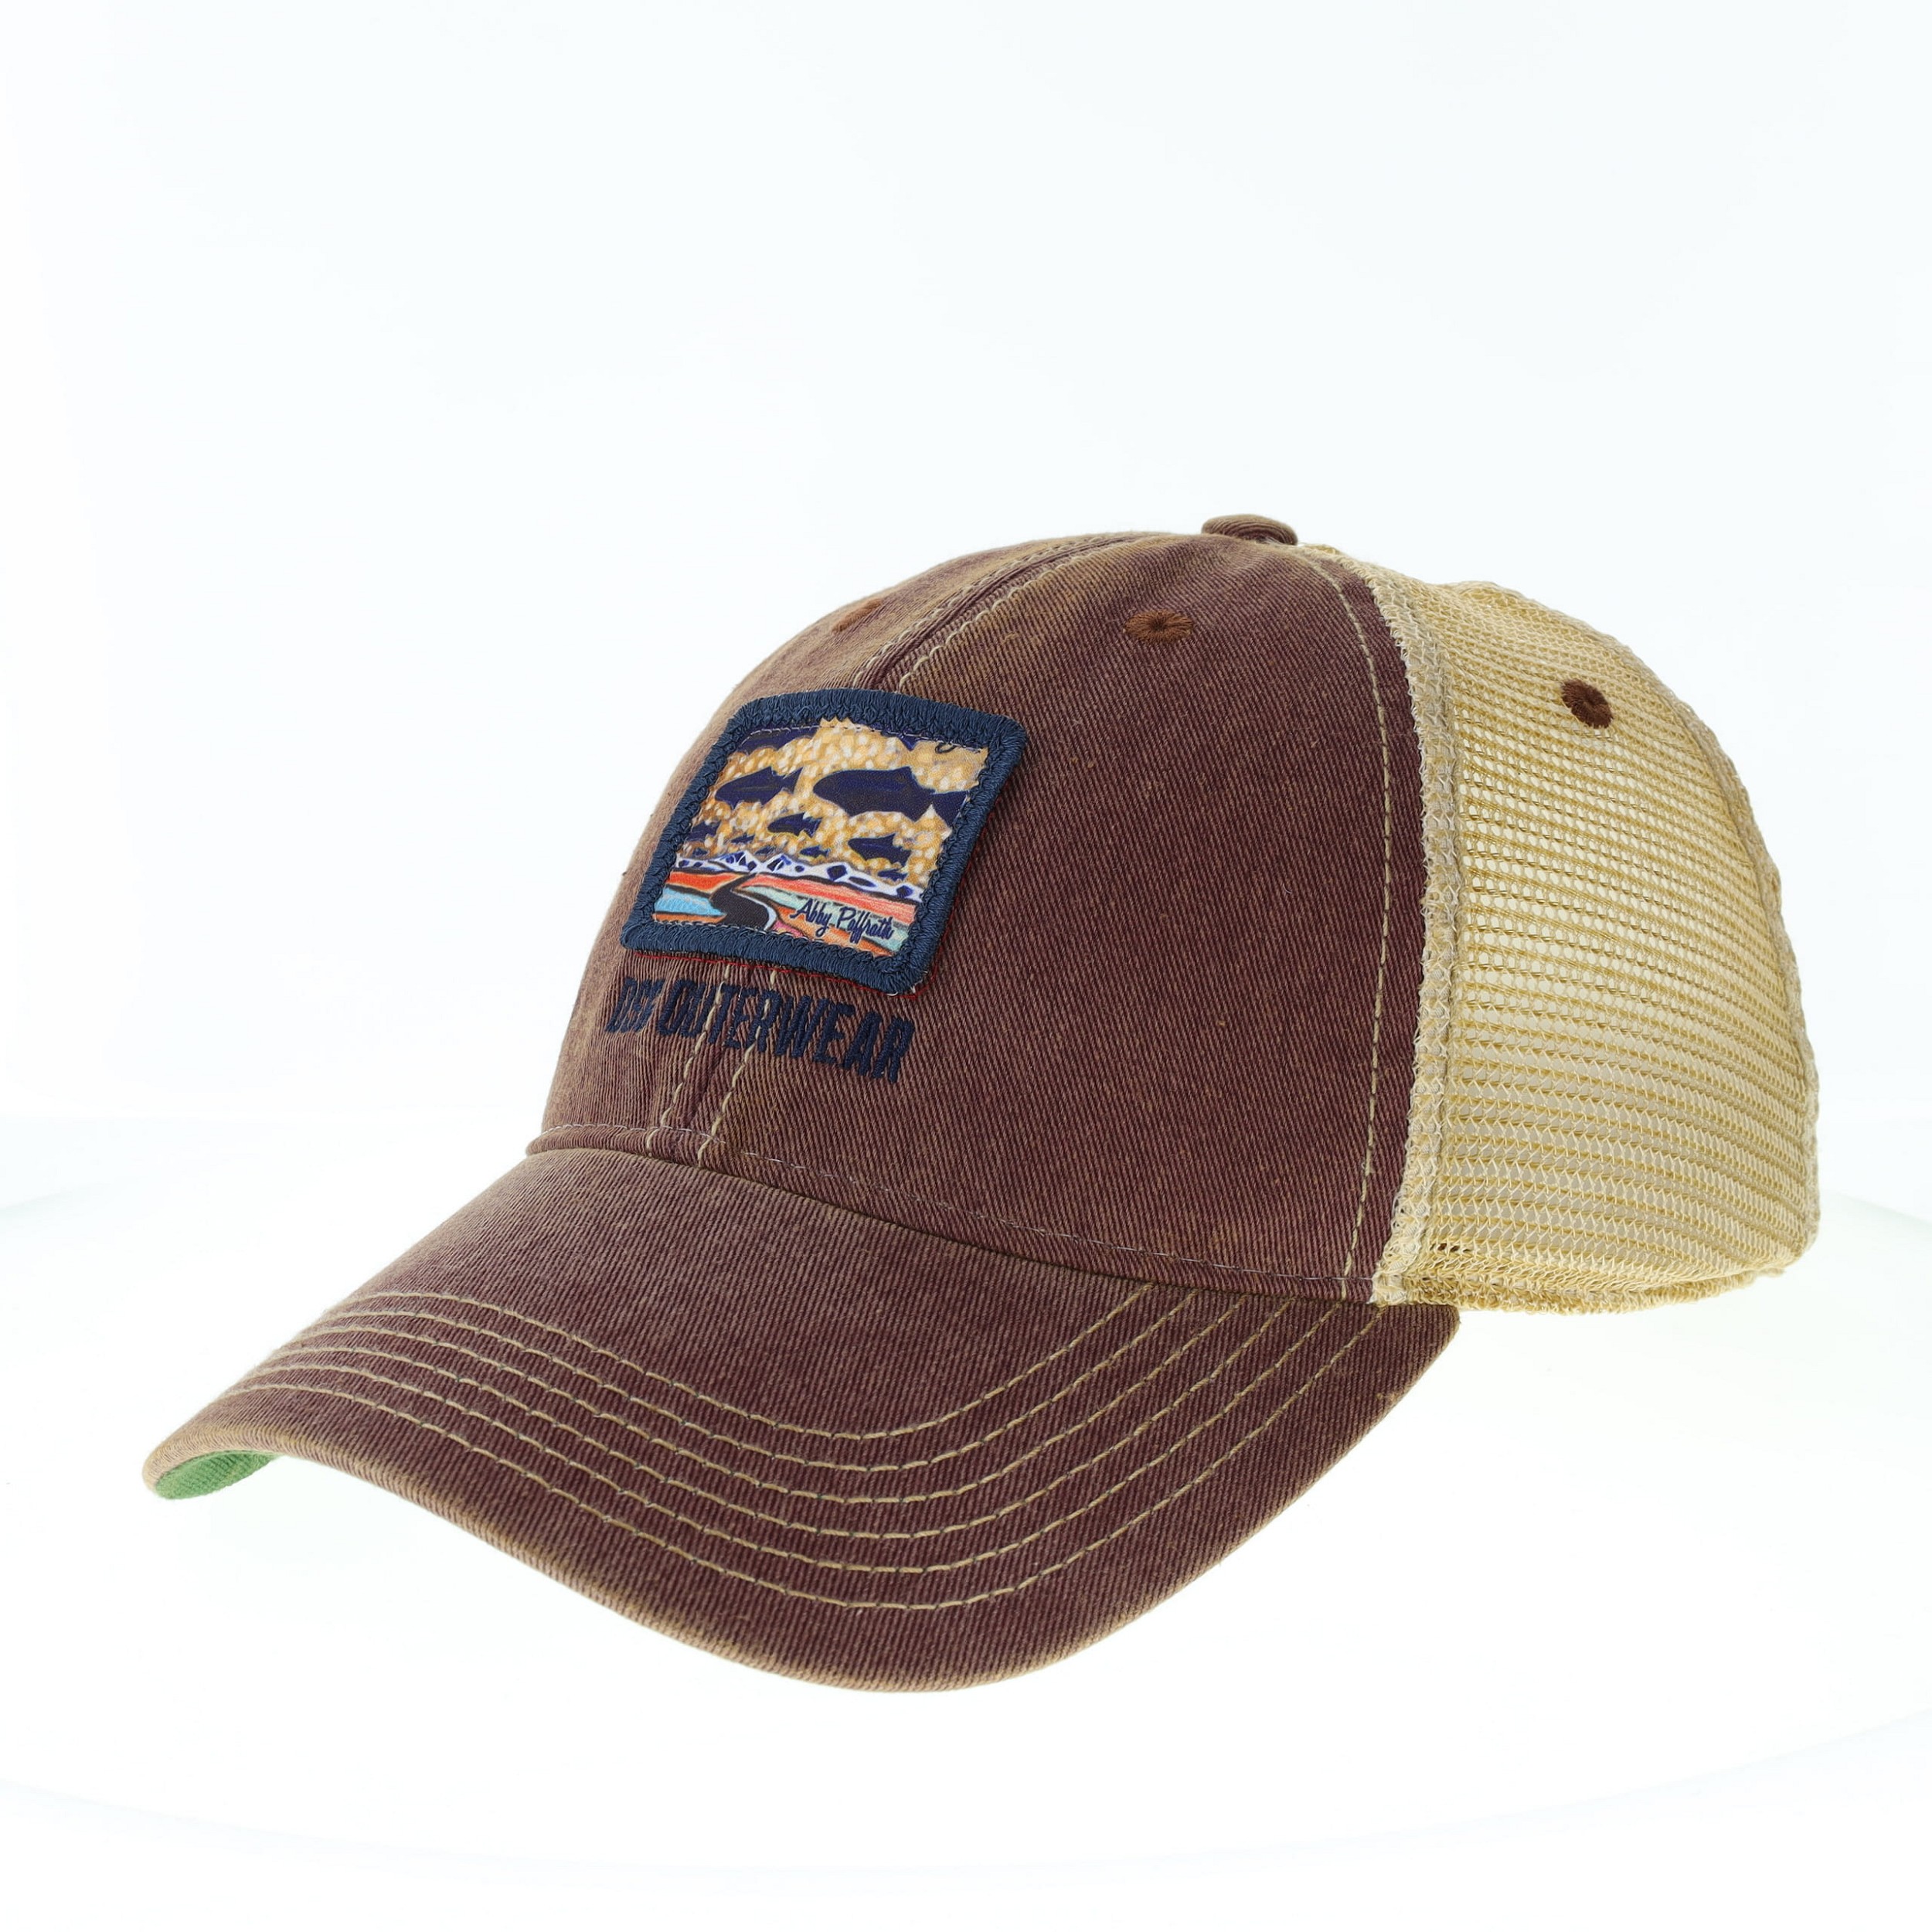 DSG Old Favorite Fish Trucker Hat in